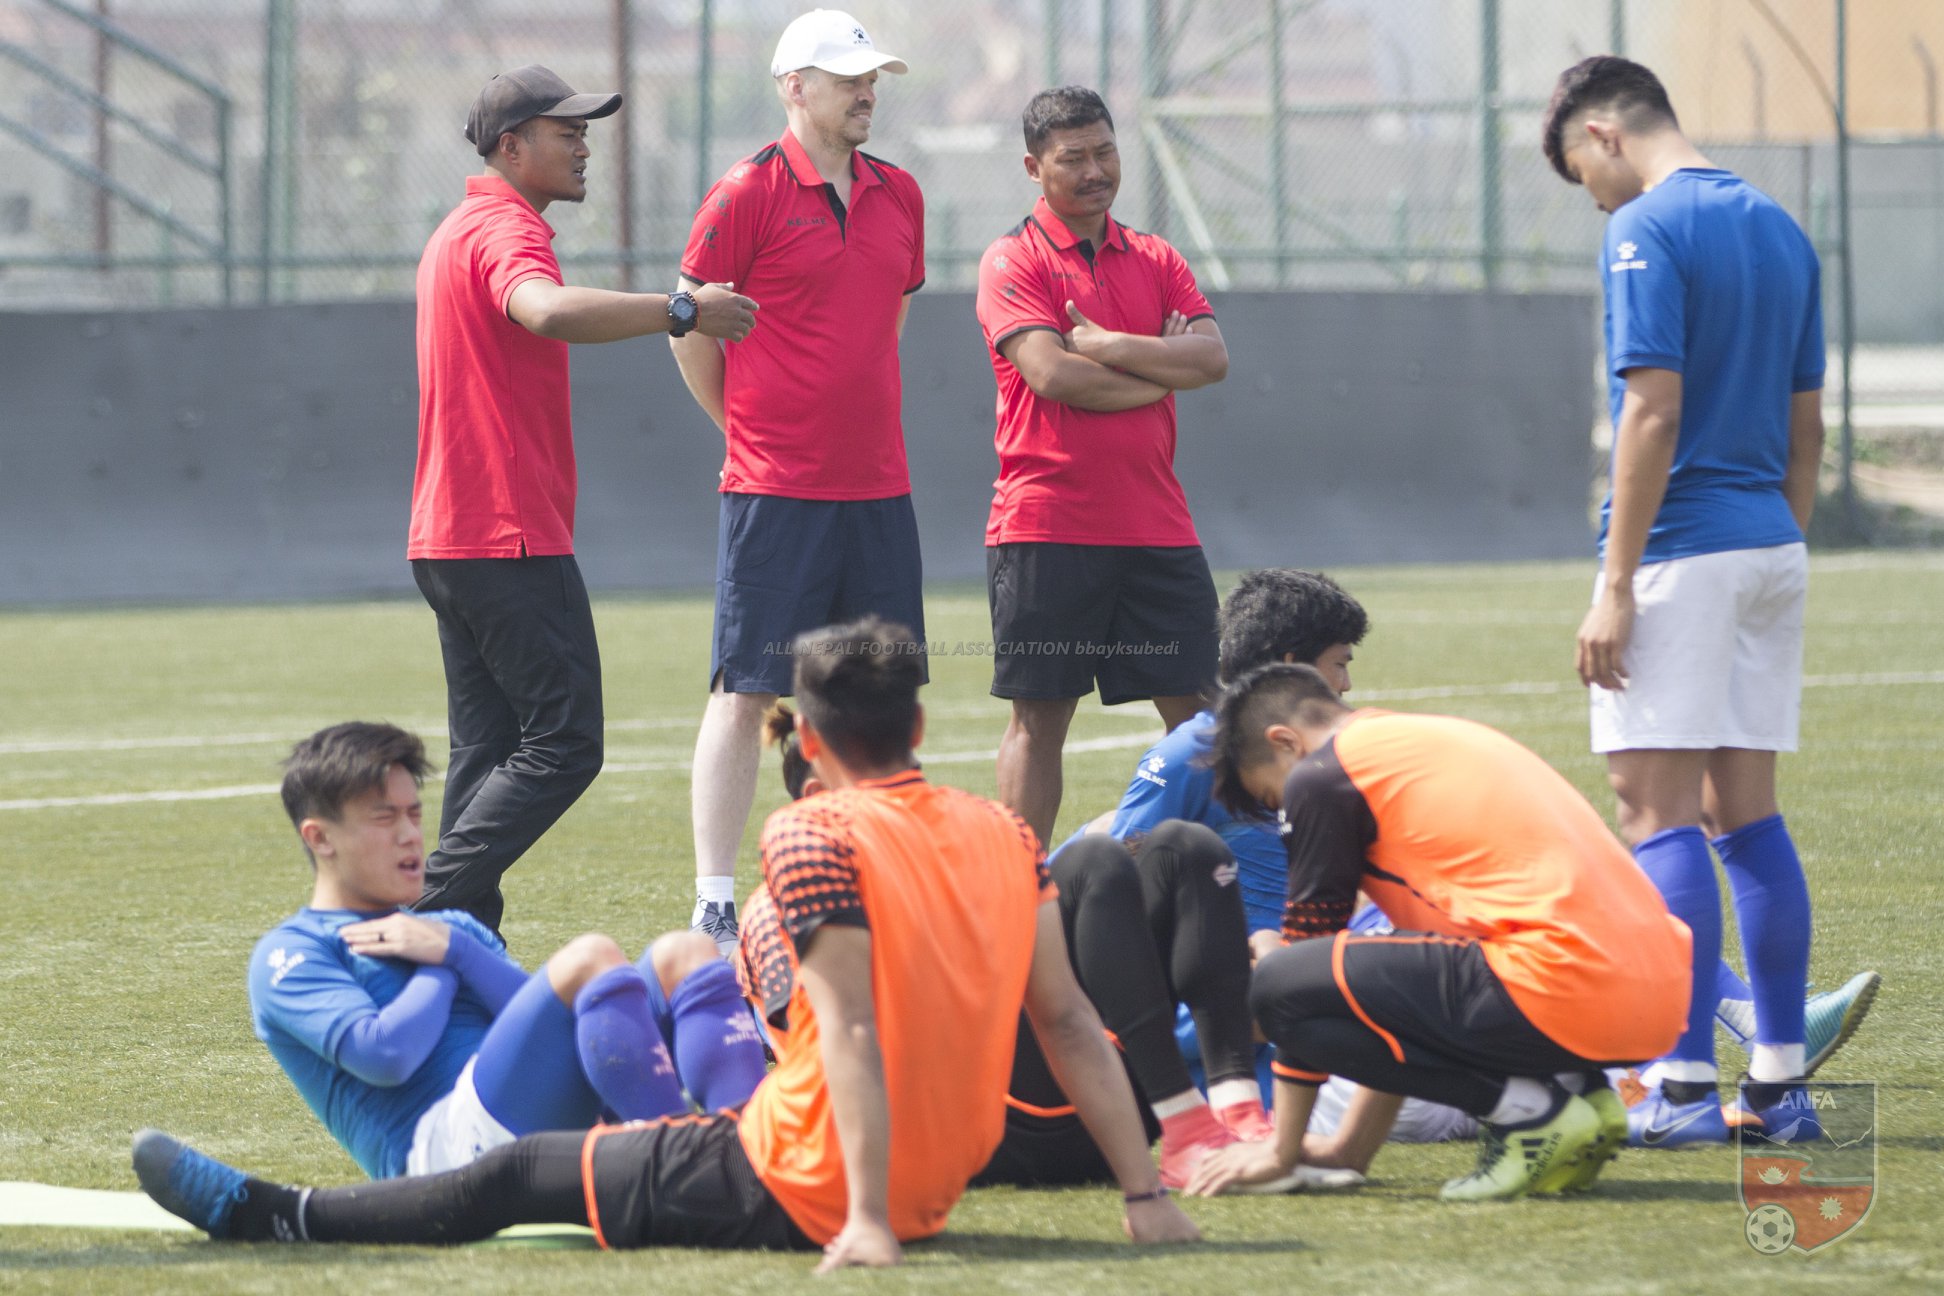 Football match between Nepal and England postponed